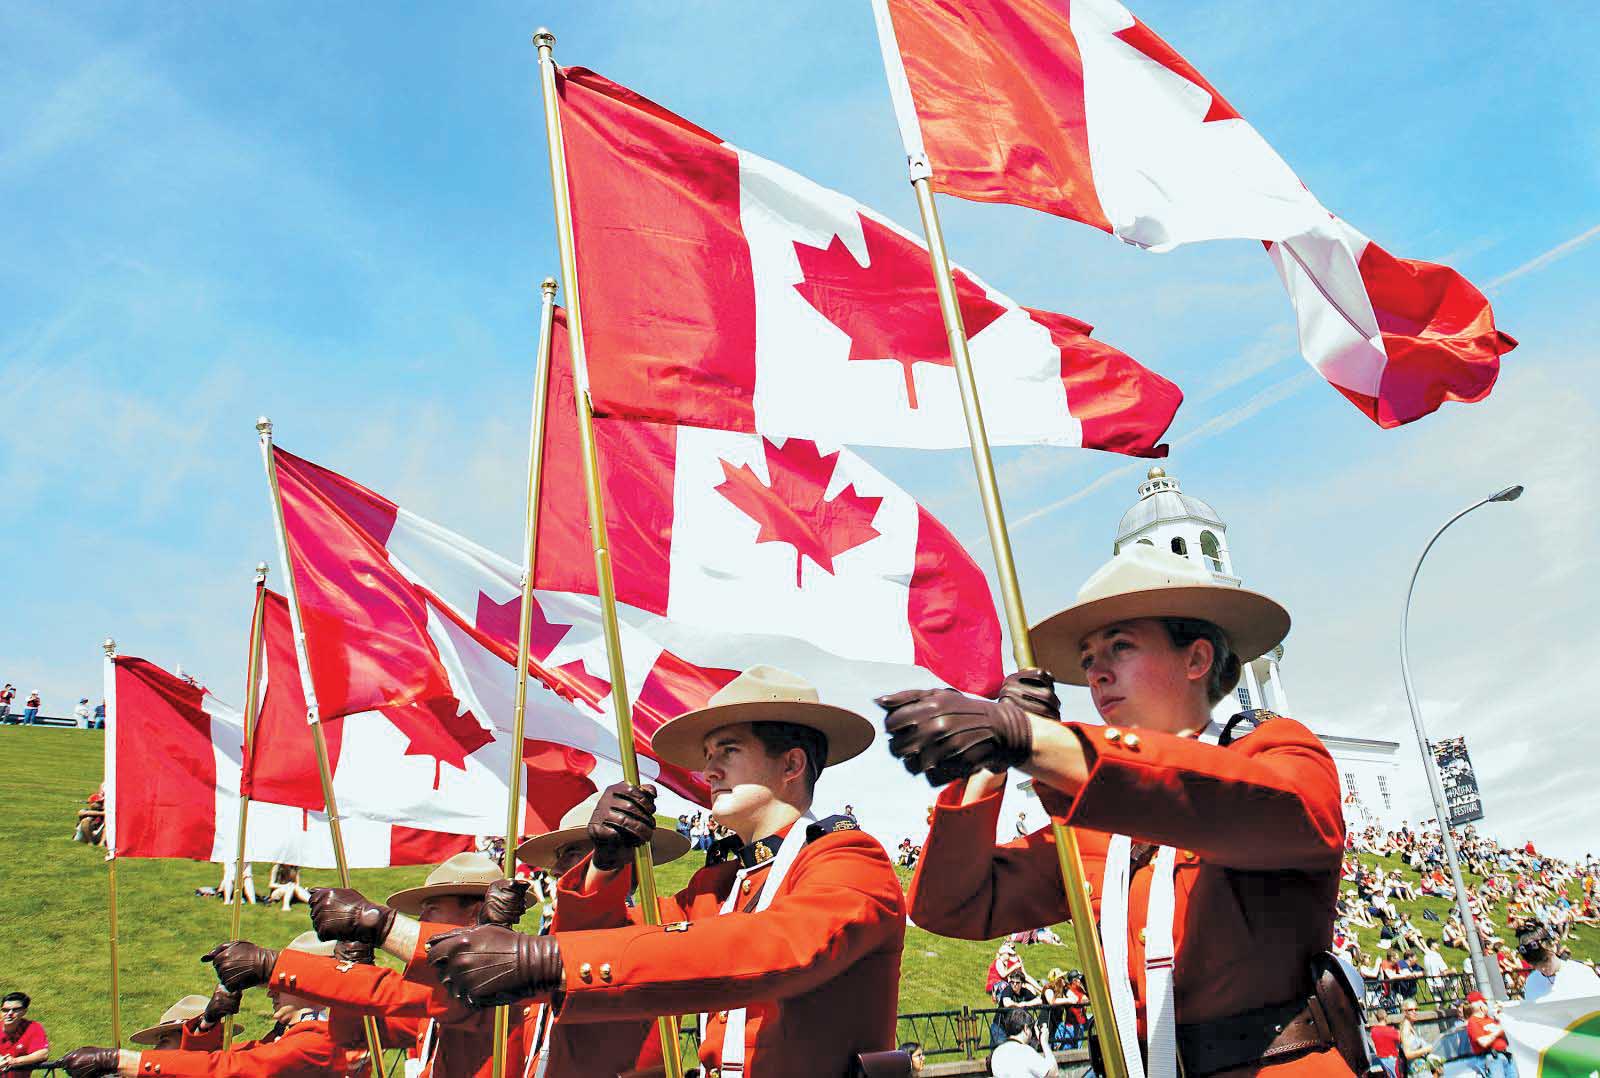 Канада 1. День независимости Канады. День Канады. Традиции Канады. Национальный день Канады.